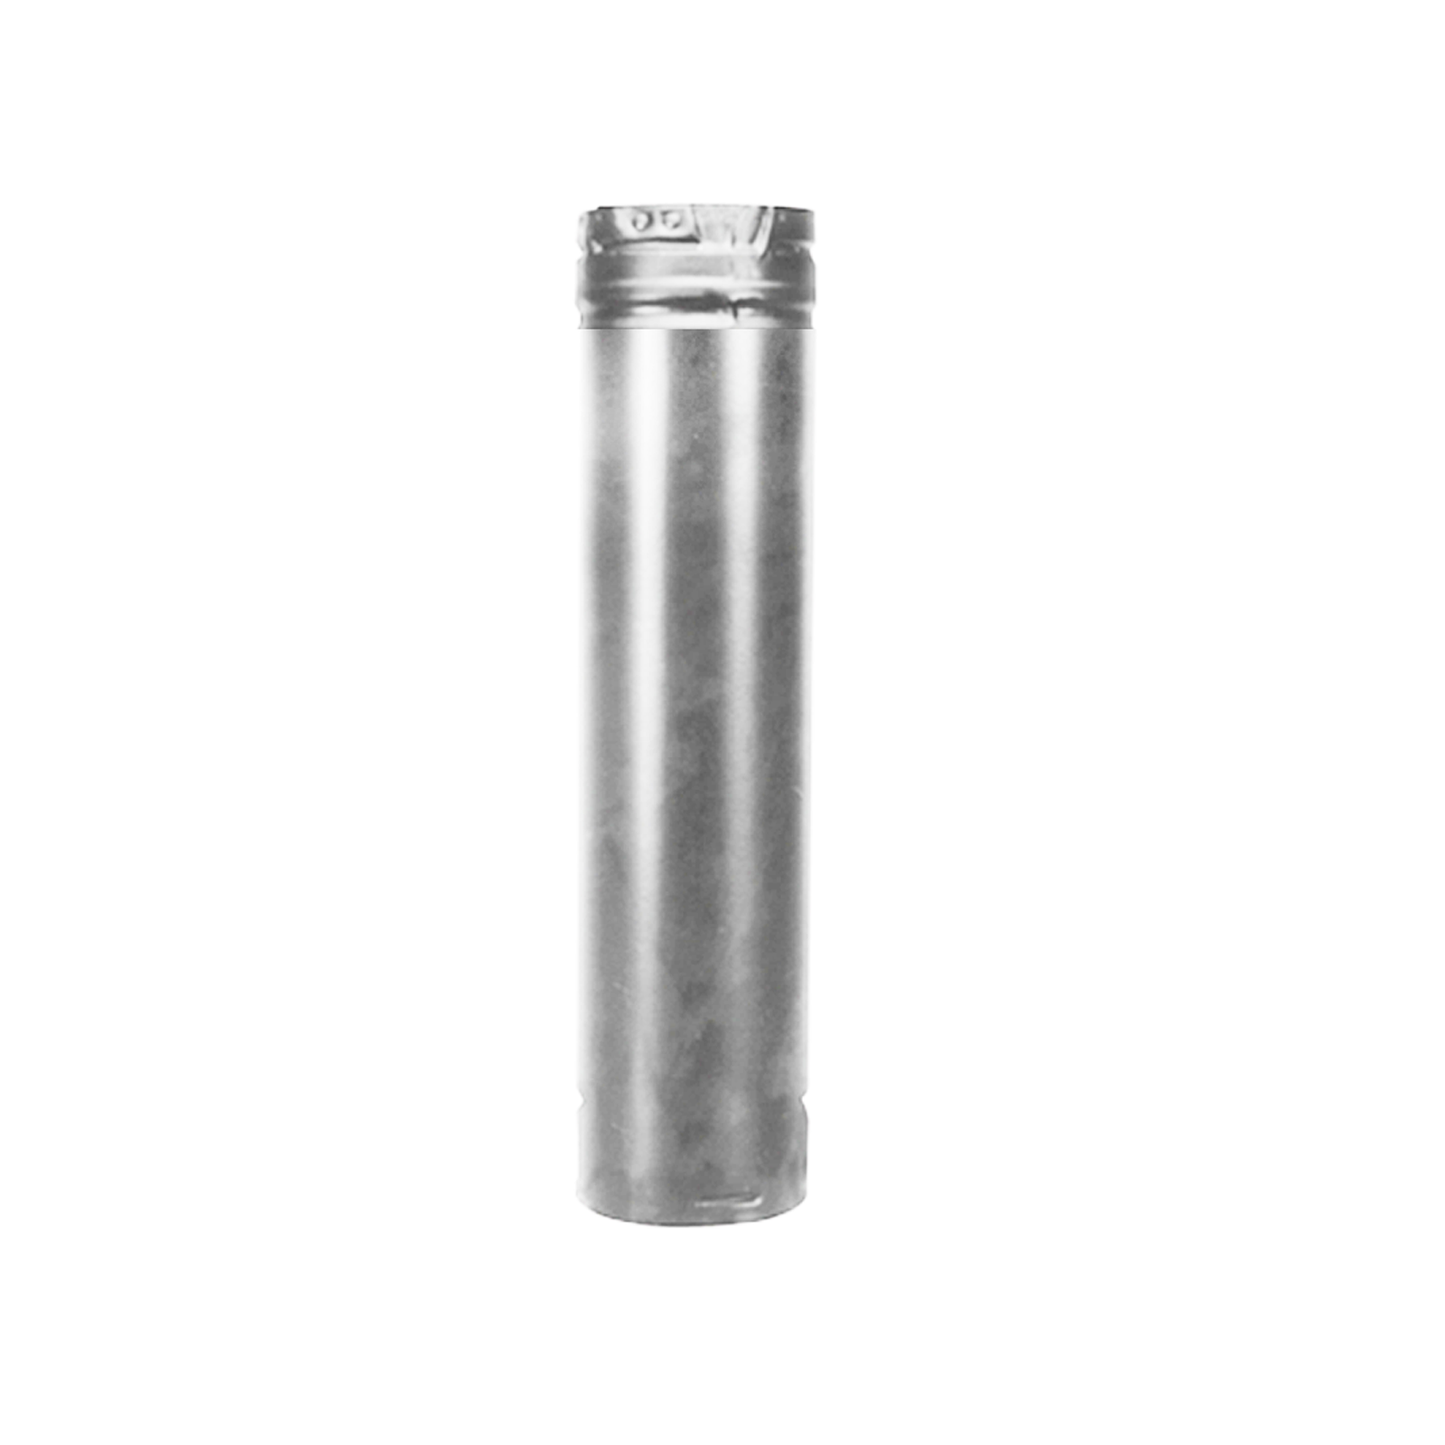 DuraVent Pellet Vent Pro 24" Straight Length Pipe | 3PVP-24